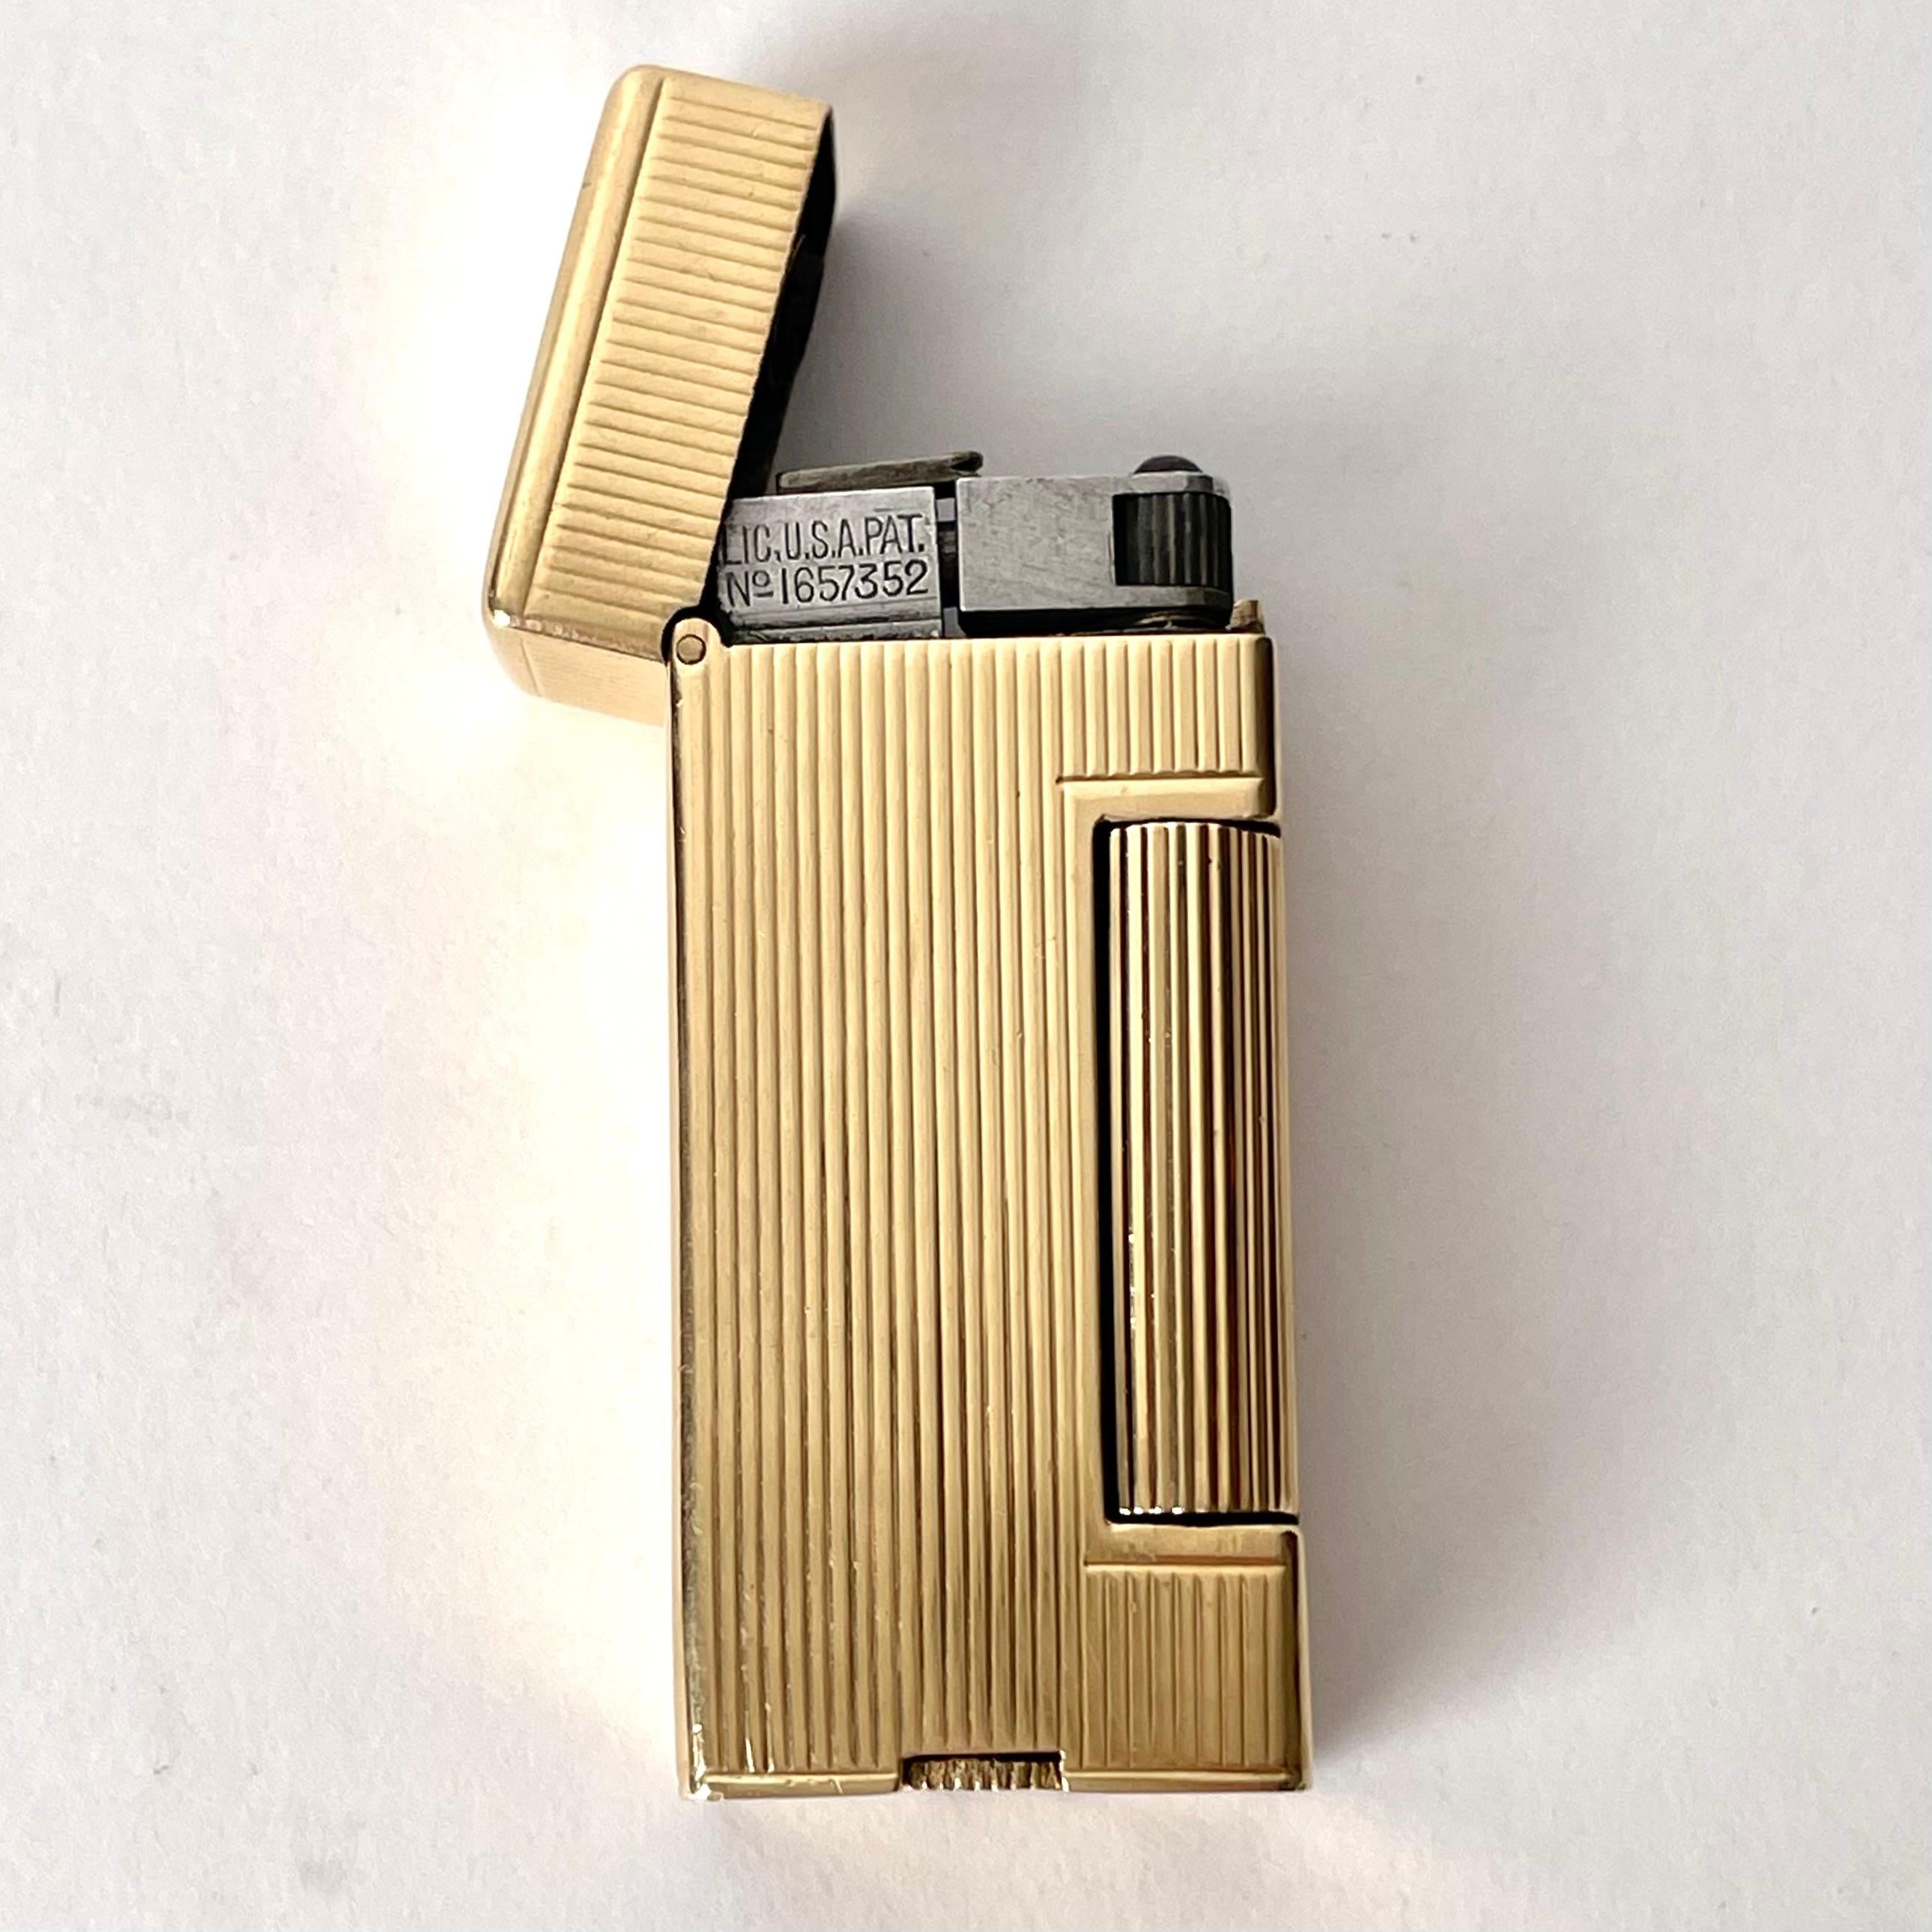 Dunhill 14 Carat Gold Cigarette Gasoline Lighter from 1940s-1950s 3